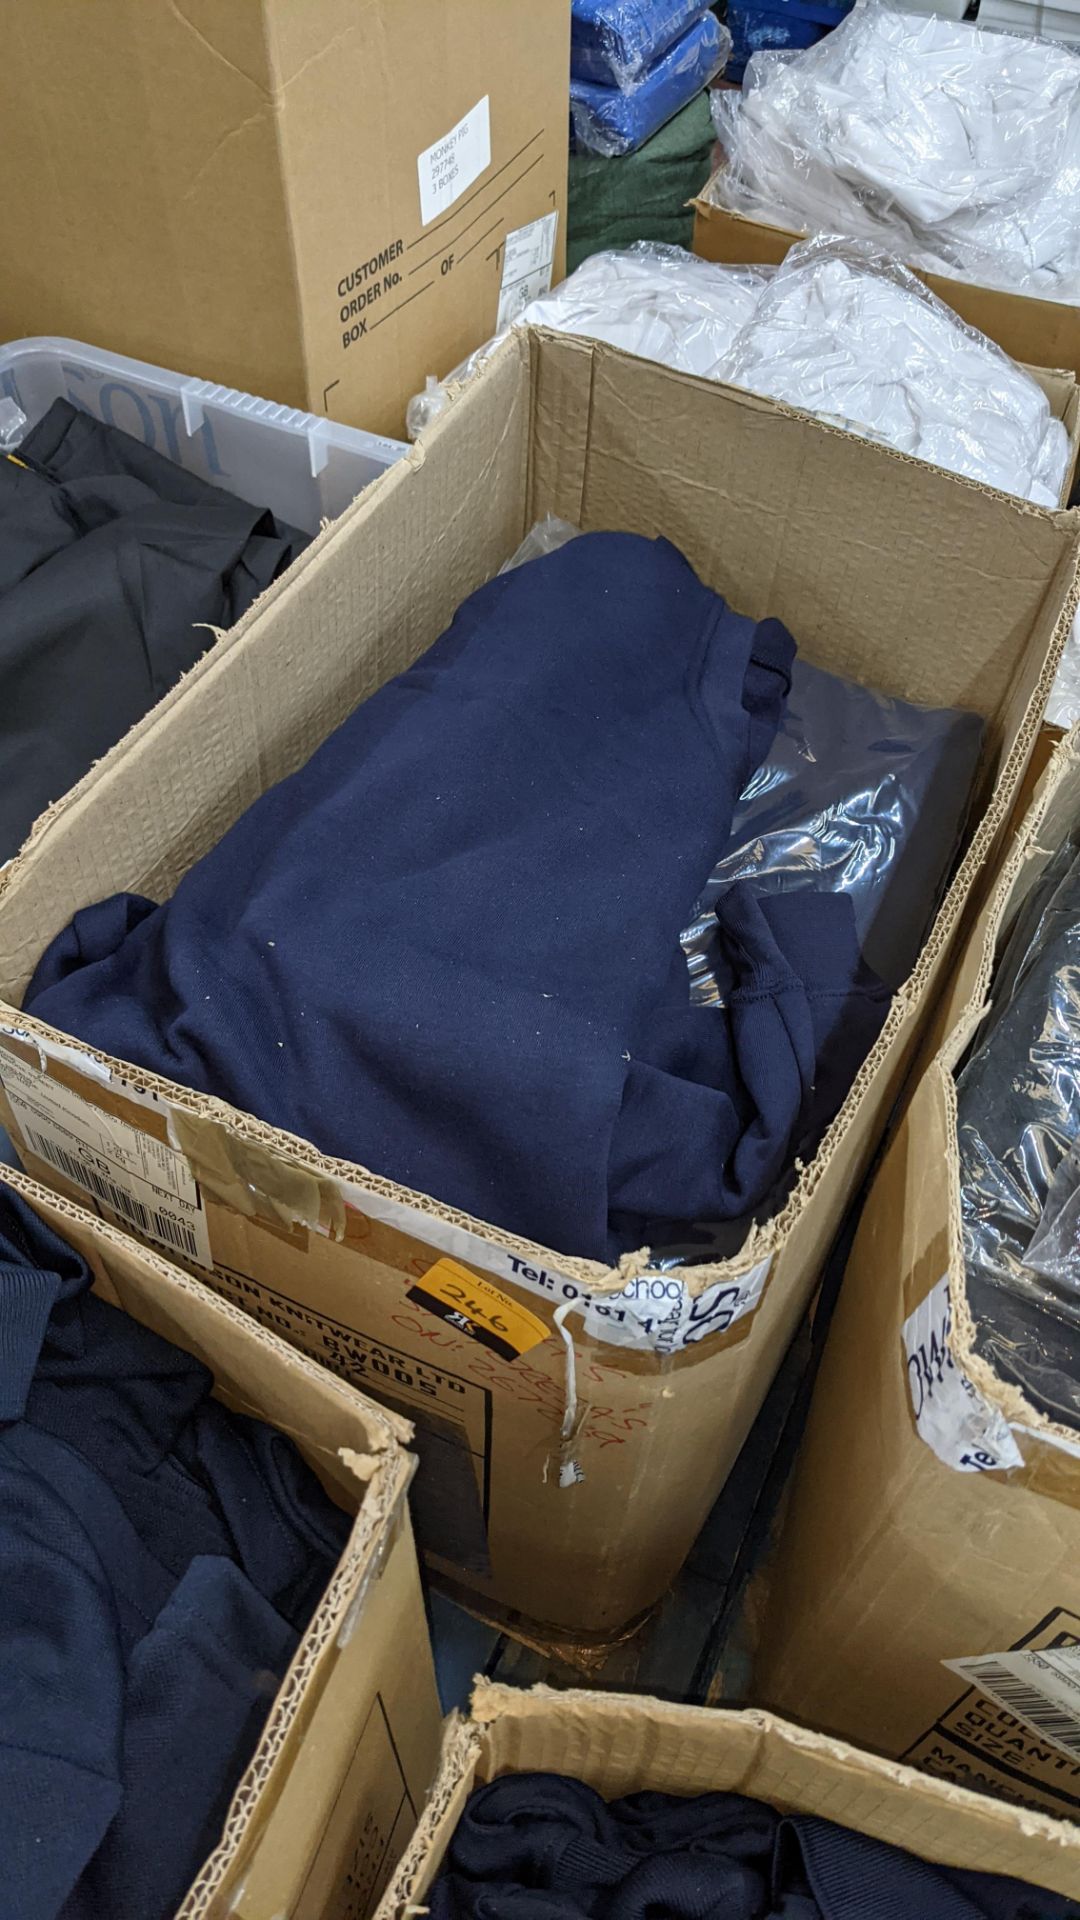 Approx 20 off blue sweatshirts - 1 large box